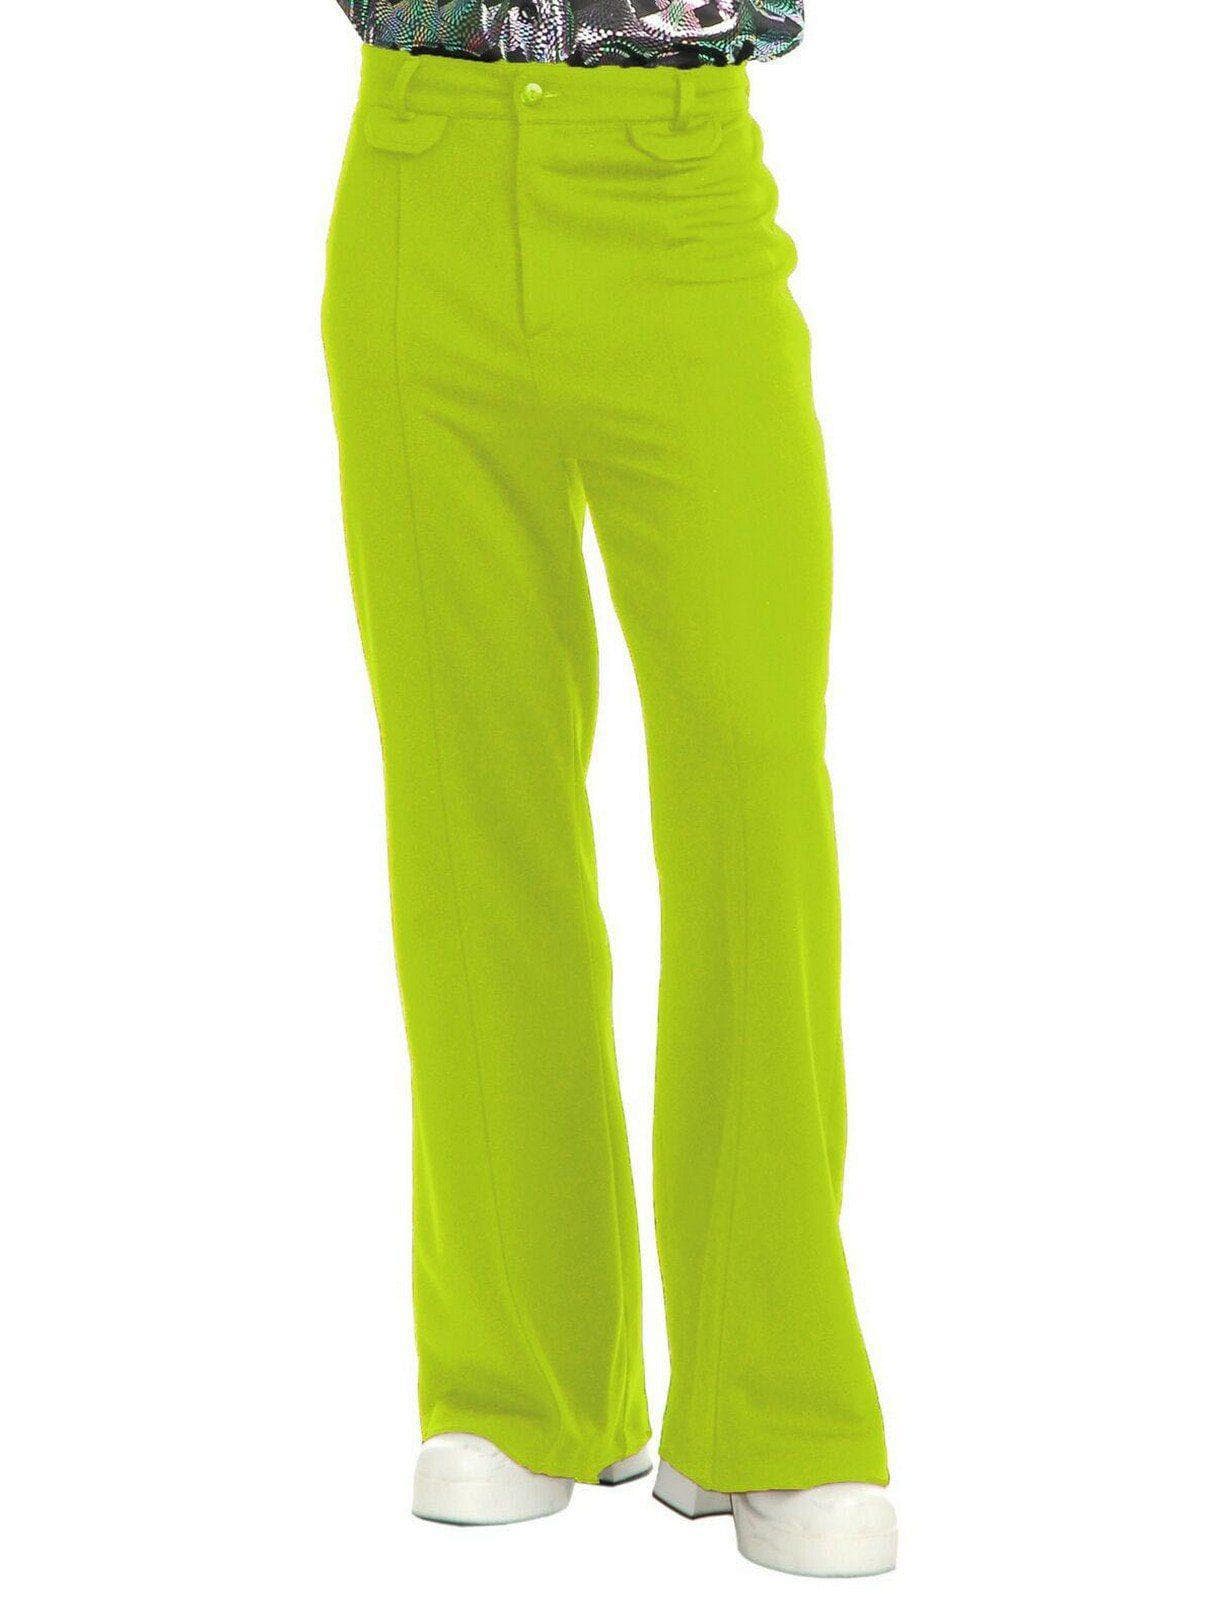 Adult Disco Pants Lime Costume - costumes.com